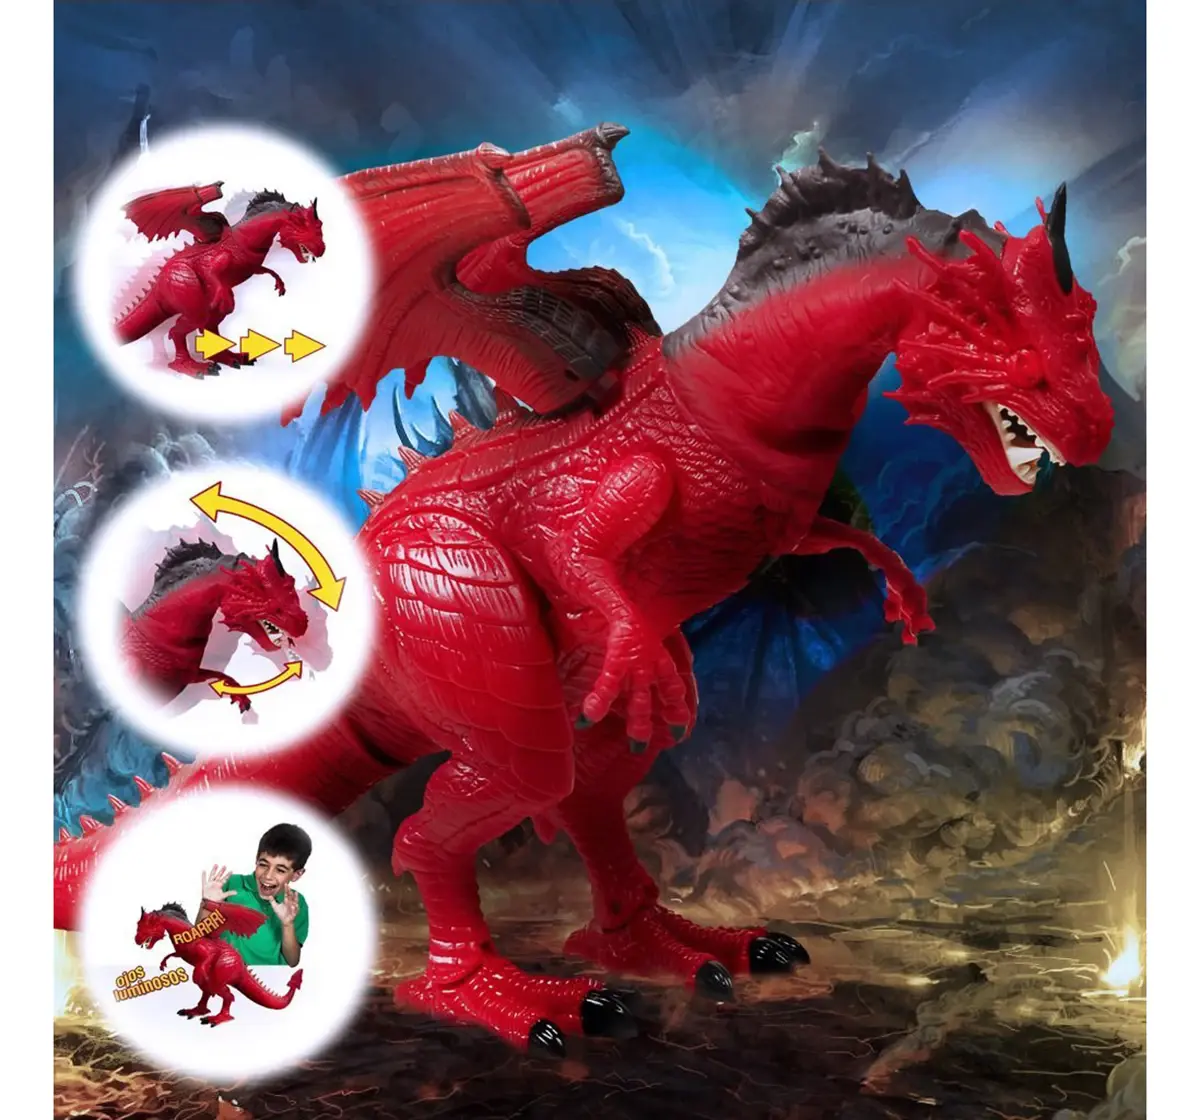 Dragon I Mighty Megasaur Lights And Sound Dragon (Red)